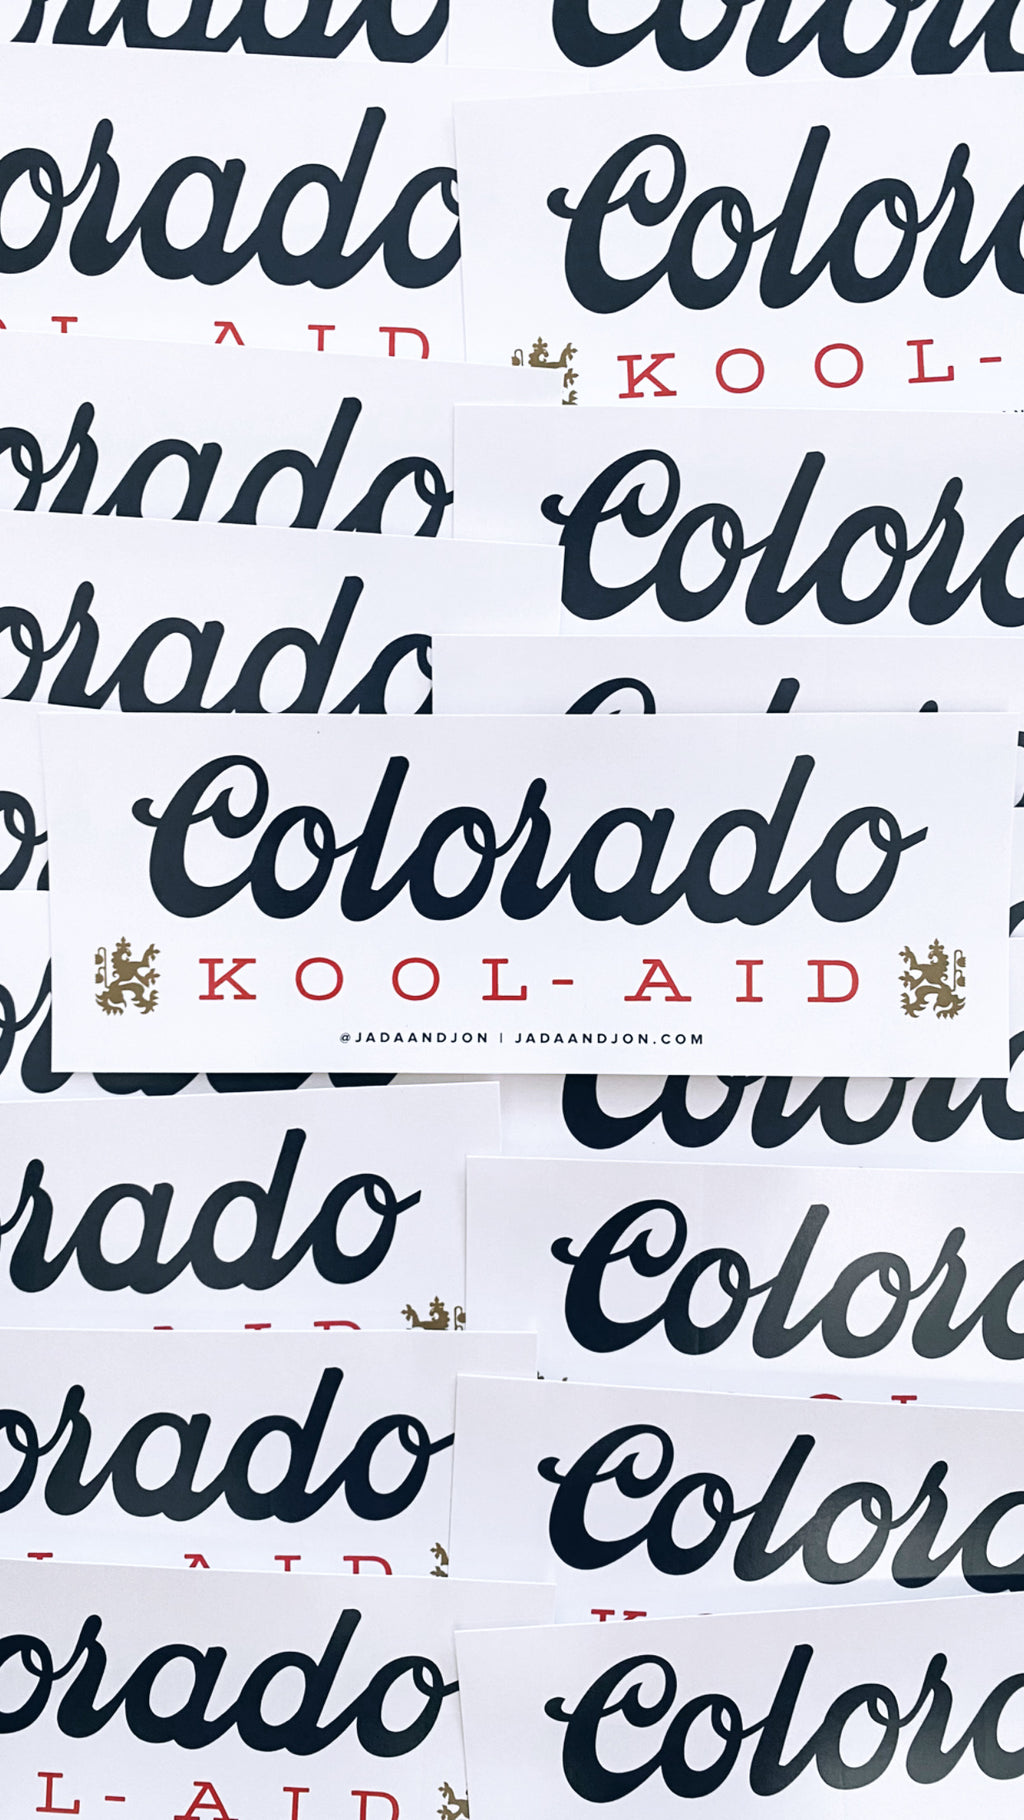 Colorado Kool Classy Cuntry Boi Bumper Sticker